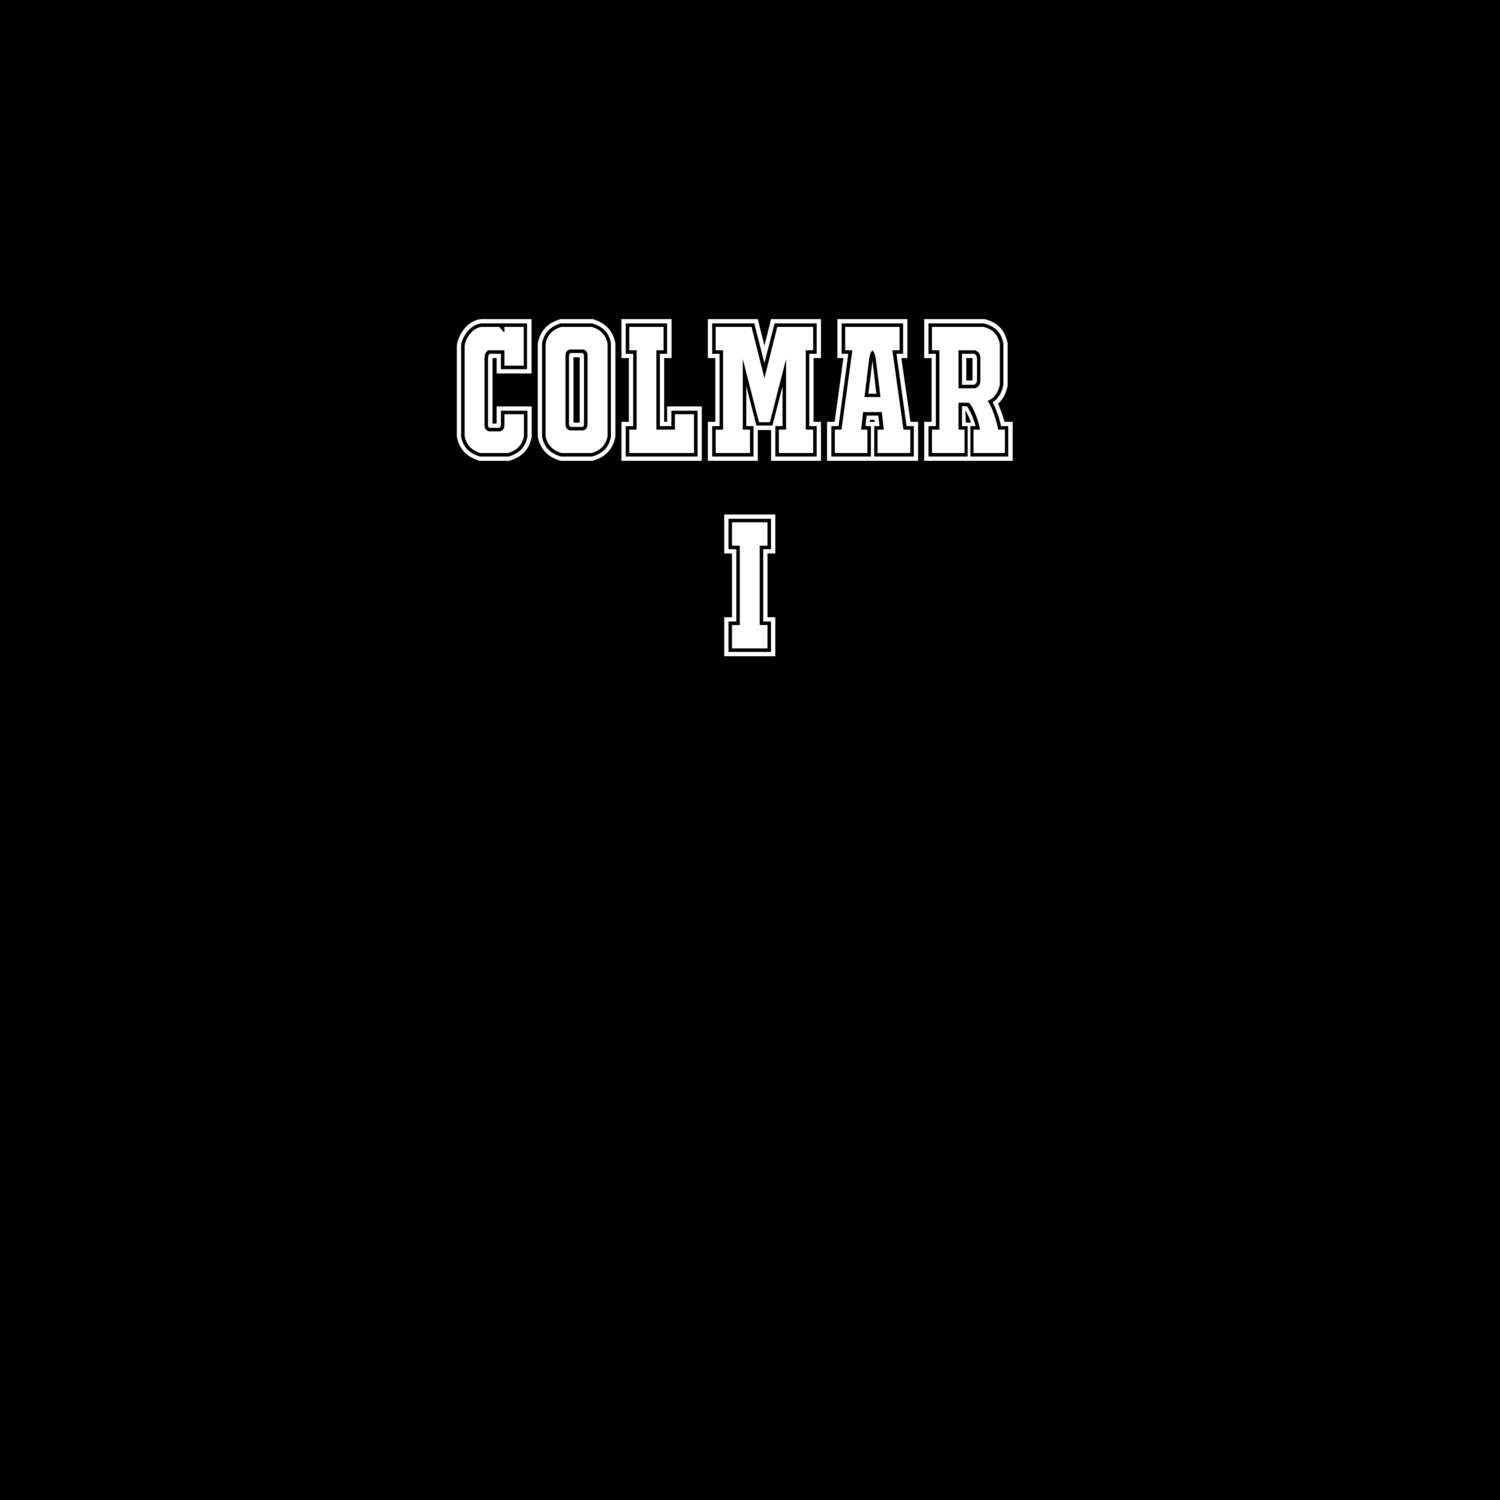 Colmar I T-Shirt »Classic«